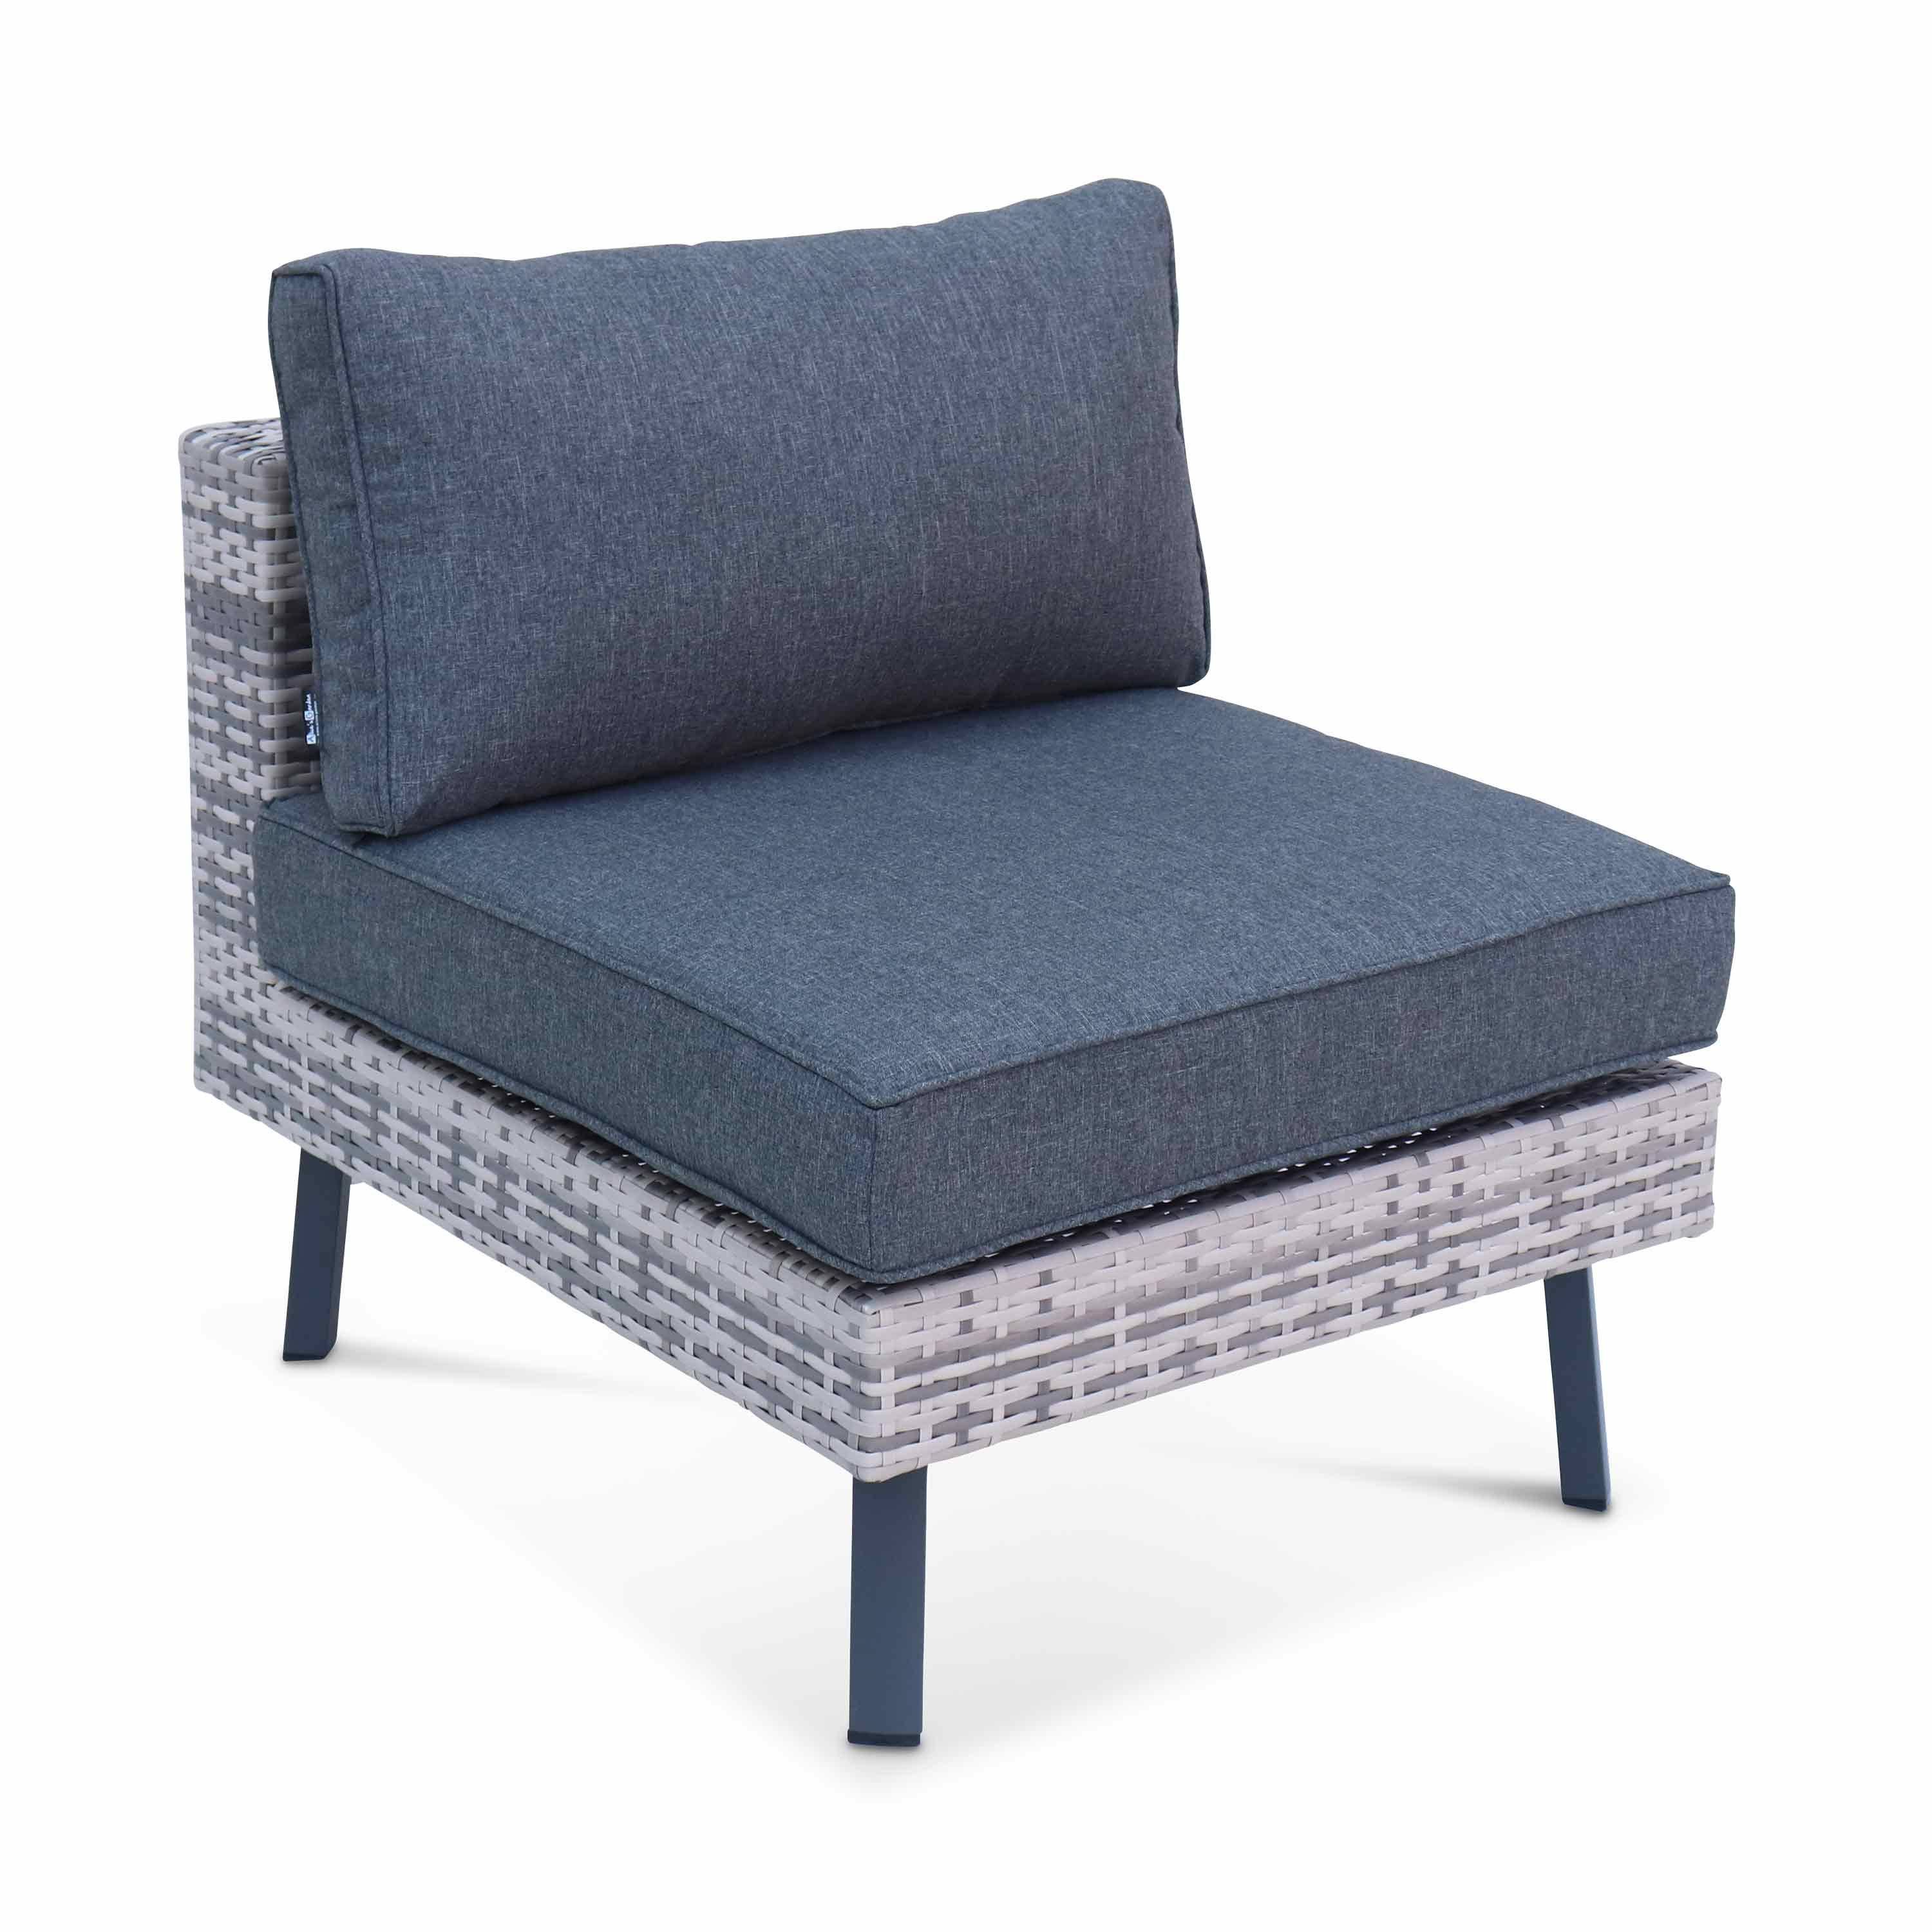 5-seater elevated polyrattan garden sofa set with stylish legs - sofa, 2 armchairs, footrest, coffee table - Alba - Mixed Grey rattan, Charcoal Grey cushions ,sweeek,Photo4